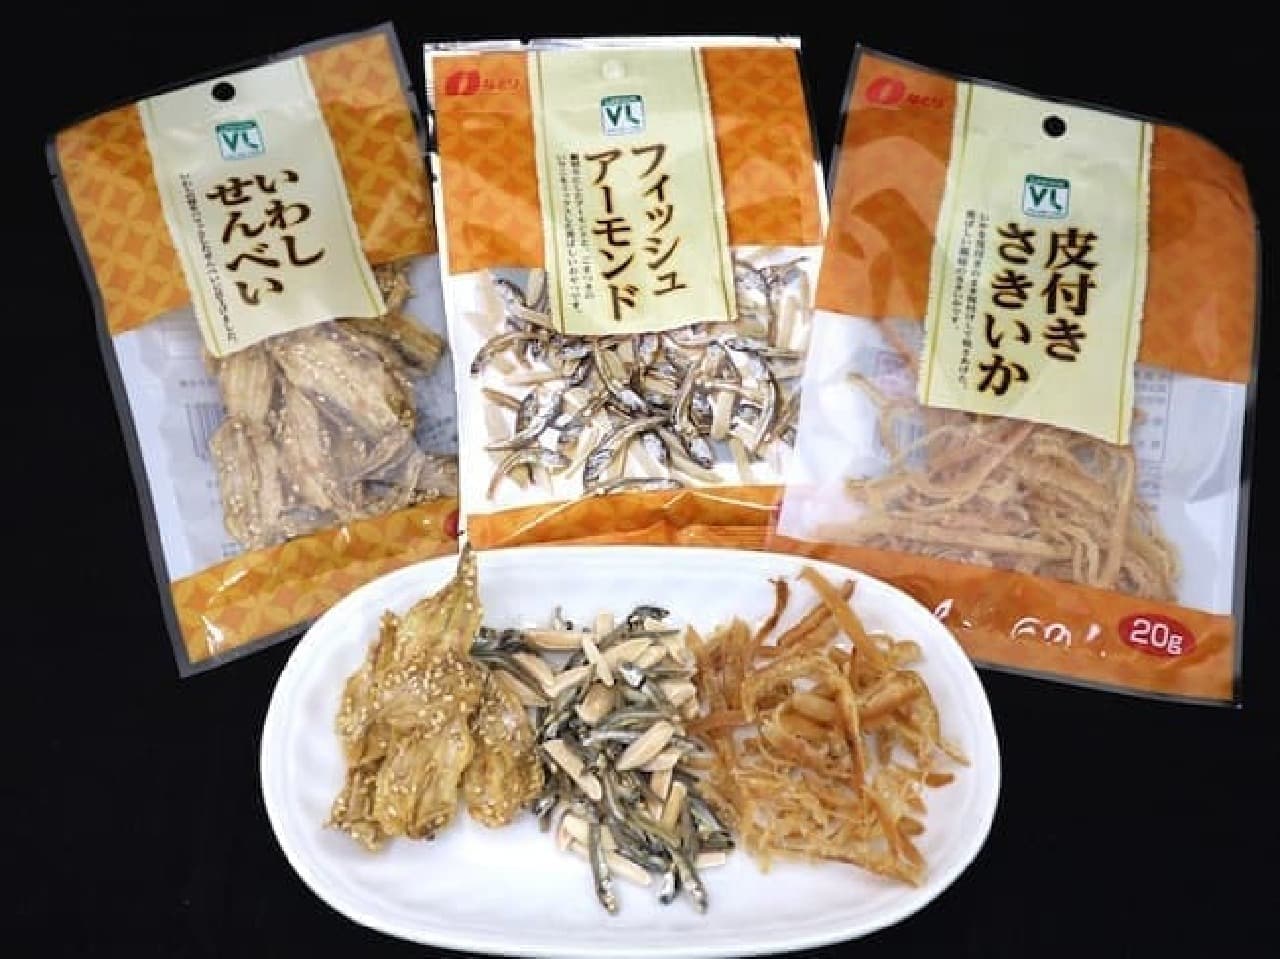 Lawson Store 100 "VL Iwashi Senbei" "VL Fish Almond" "VL Skin Sakiika"